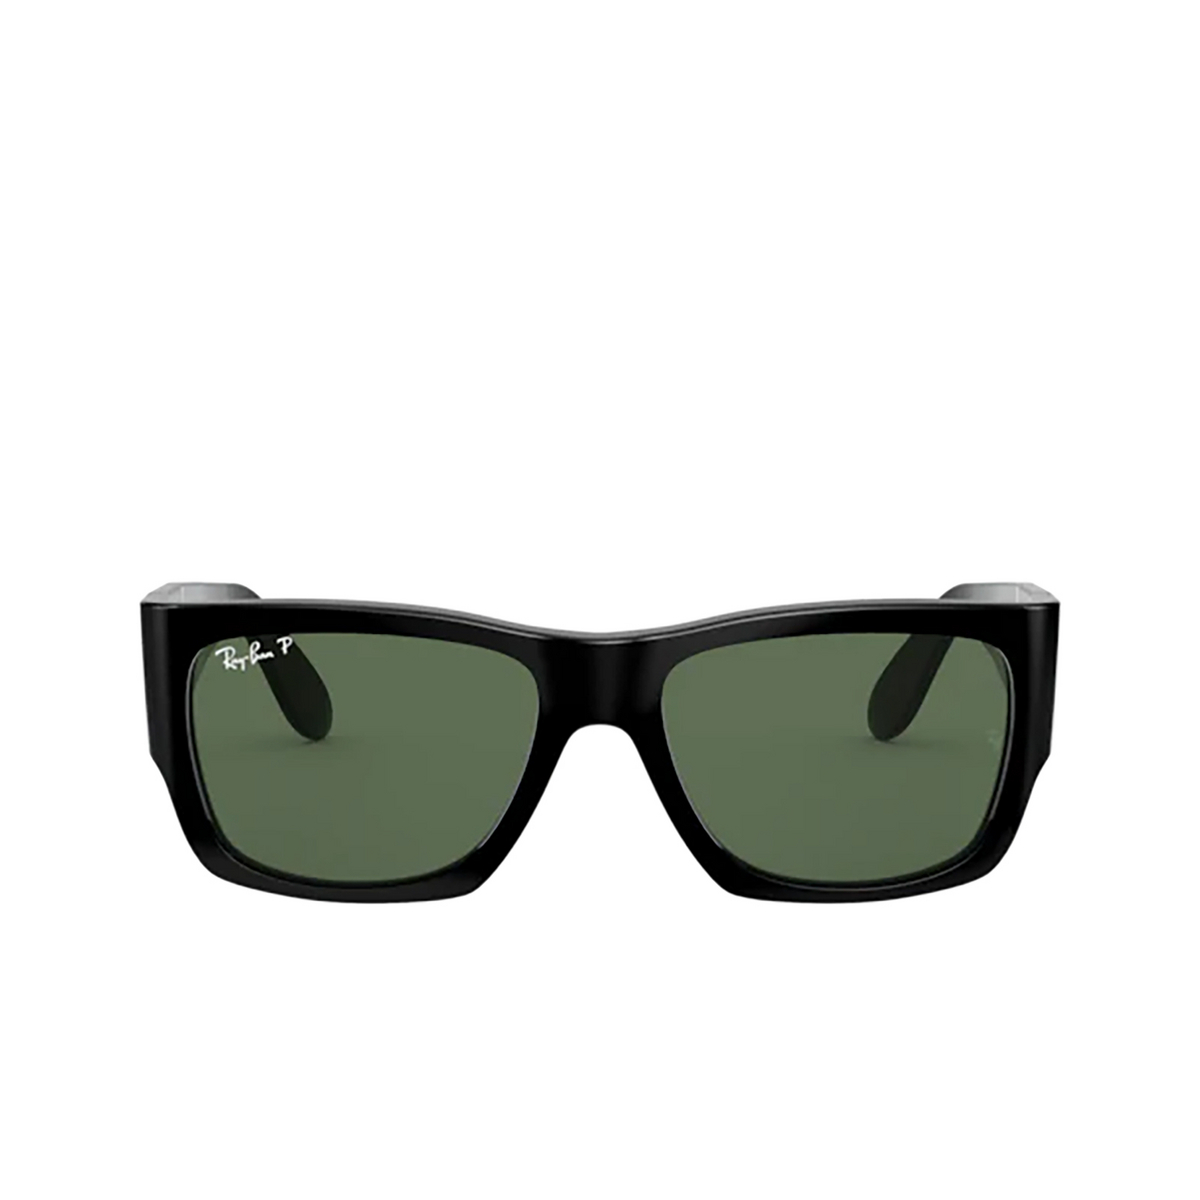 Ray-Ban WAYFARER NOMAD Sunglasses 901/58 BLACK - front view